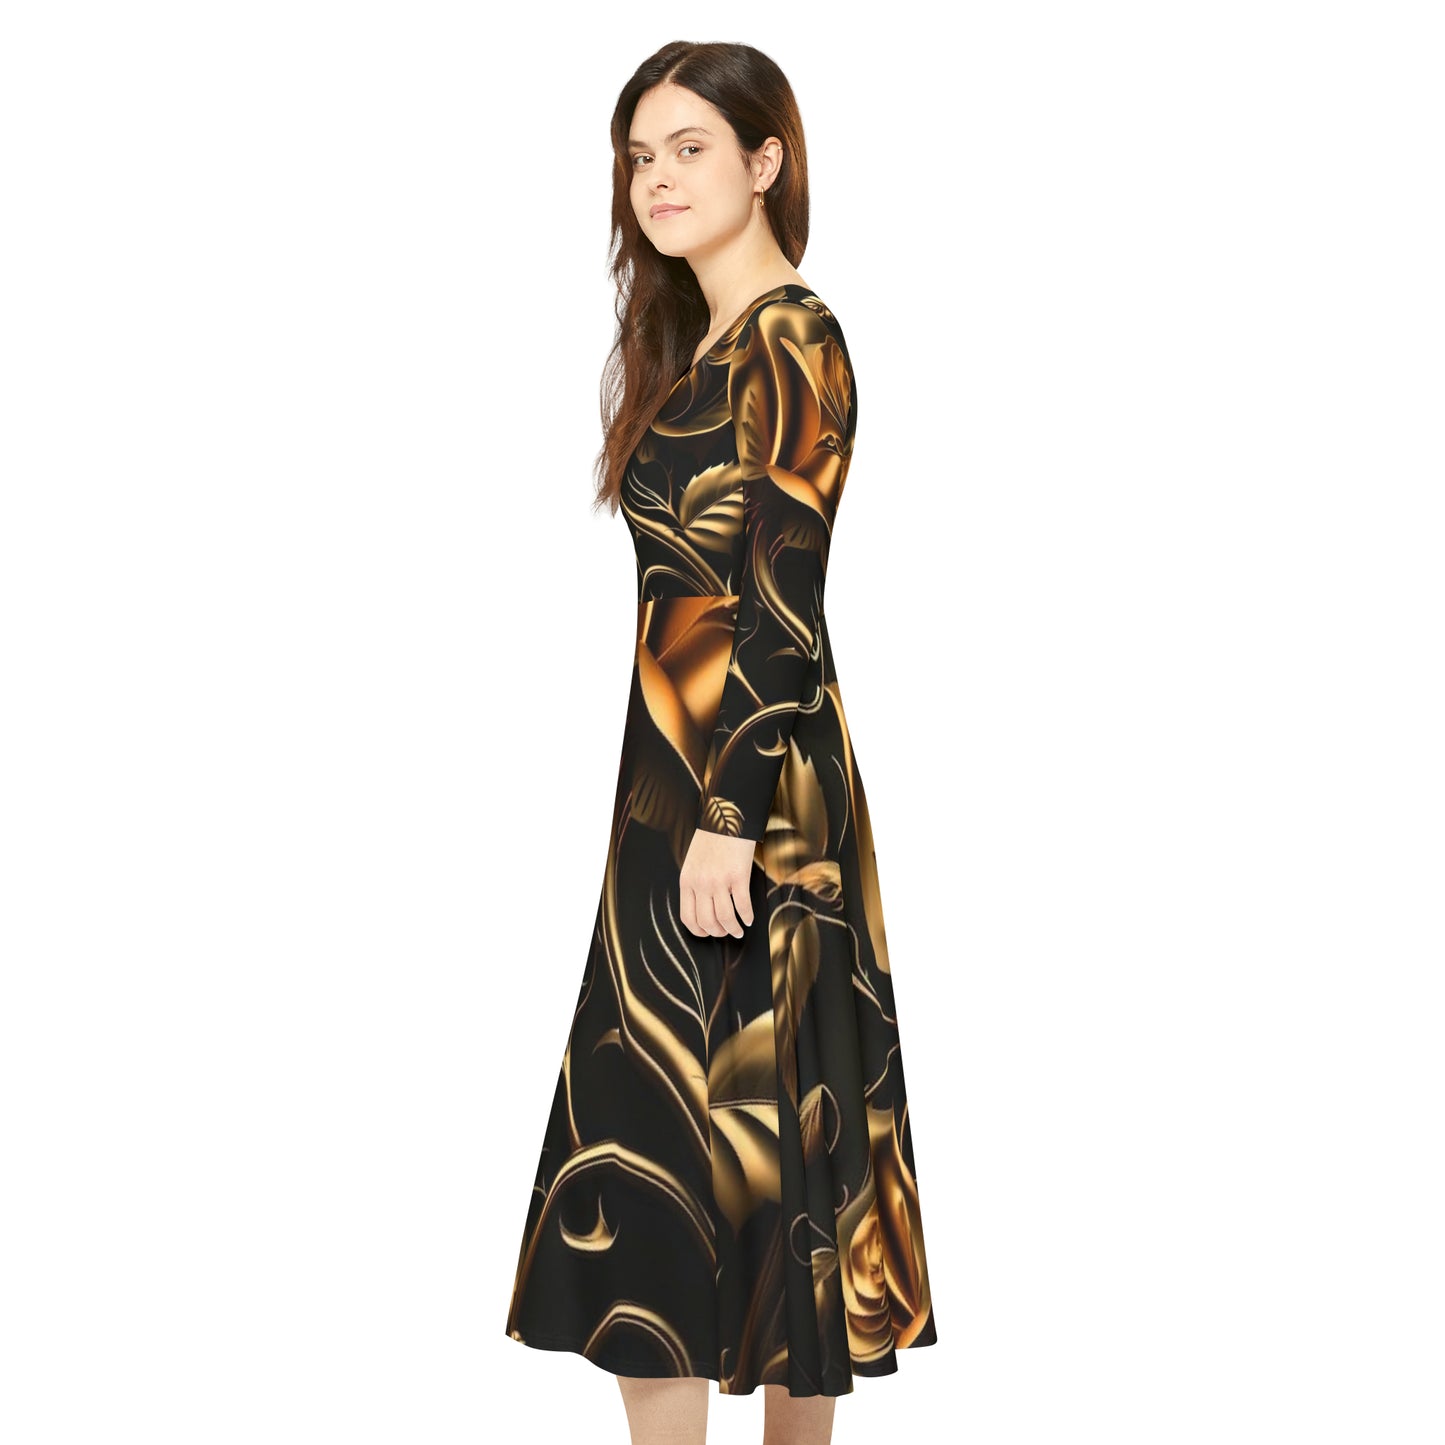 DOPiFiED Women's Long Sleeve "Gold Floral" Dance Dress